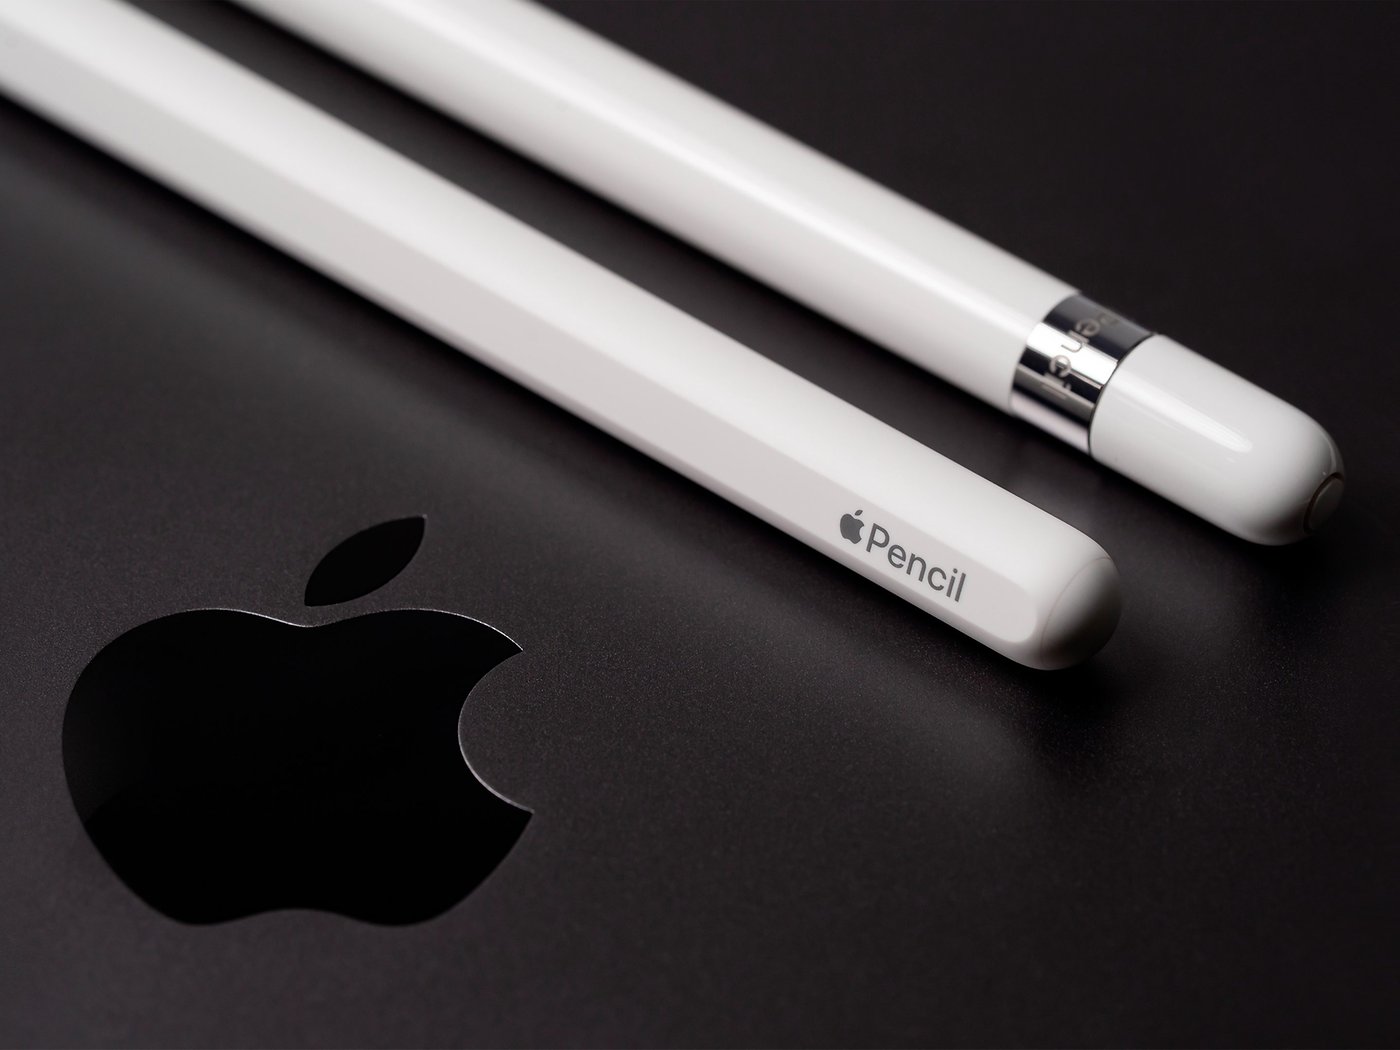 Apple Pencil 1st Generation in